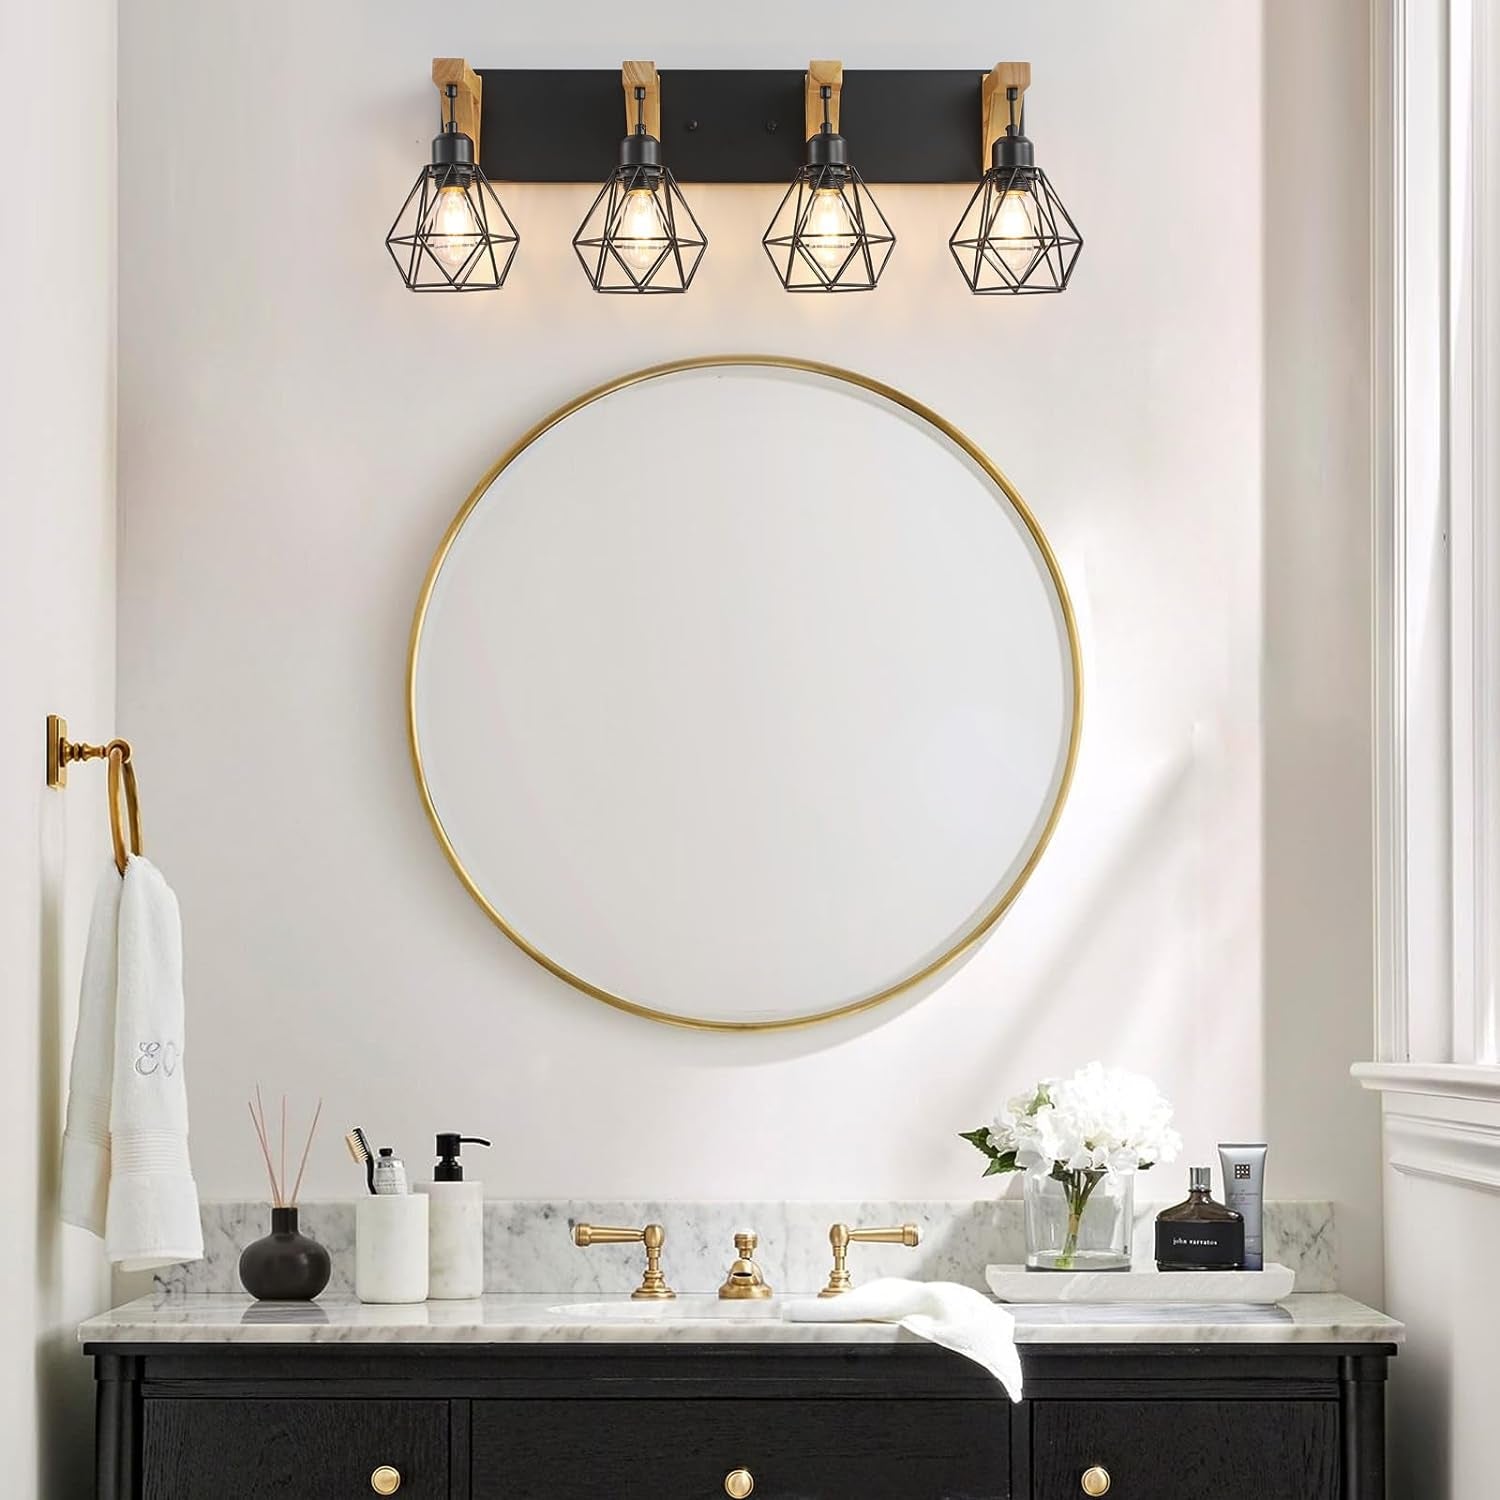 4-Light Farmhouse Bathroom Vanity Light Fixtures, Wood Bathroom Light over Mirror, Rustic Sconces Wall Lighting with Elegant Metal Lampshade for Living Room, Bedroom, Hallway